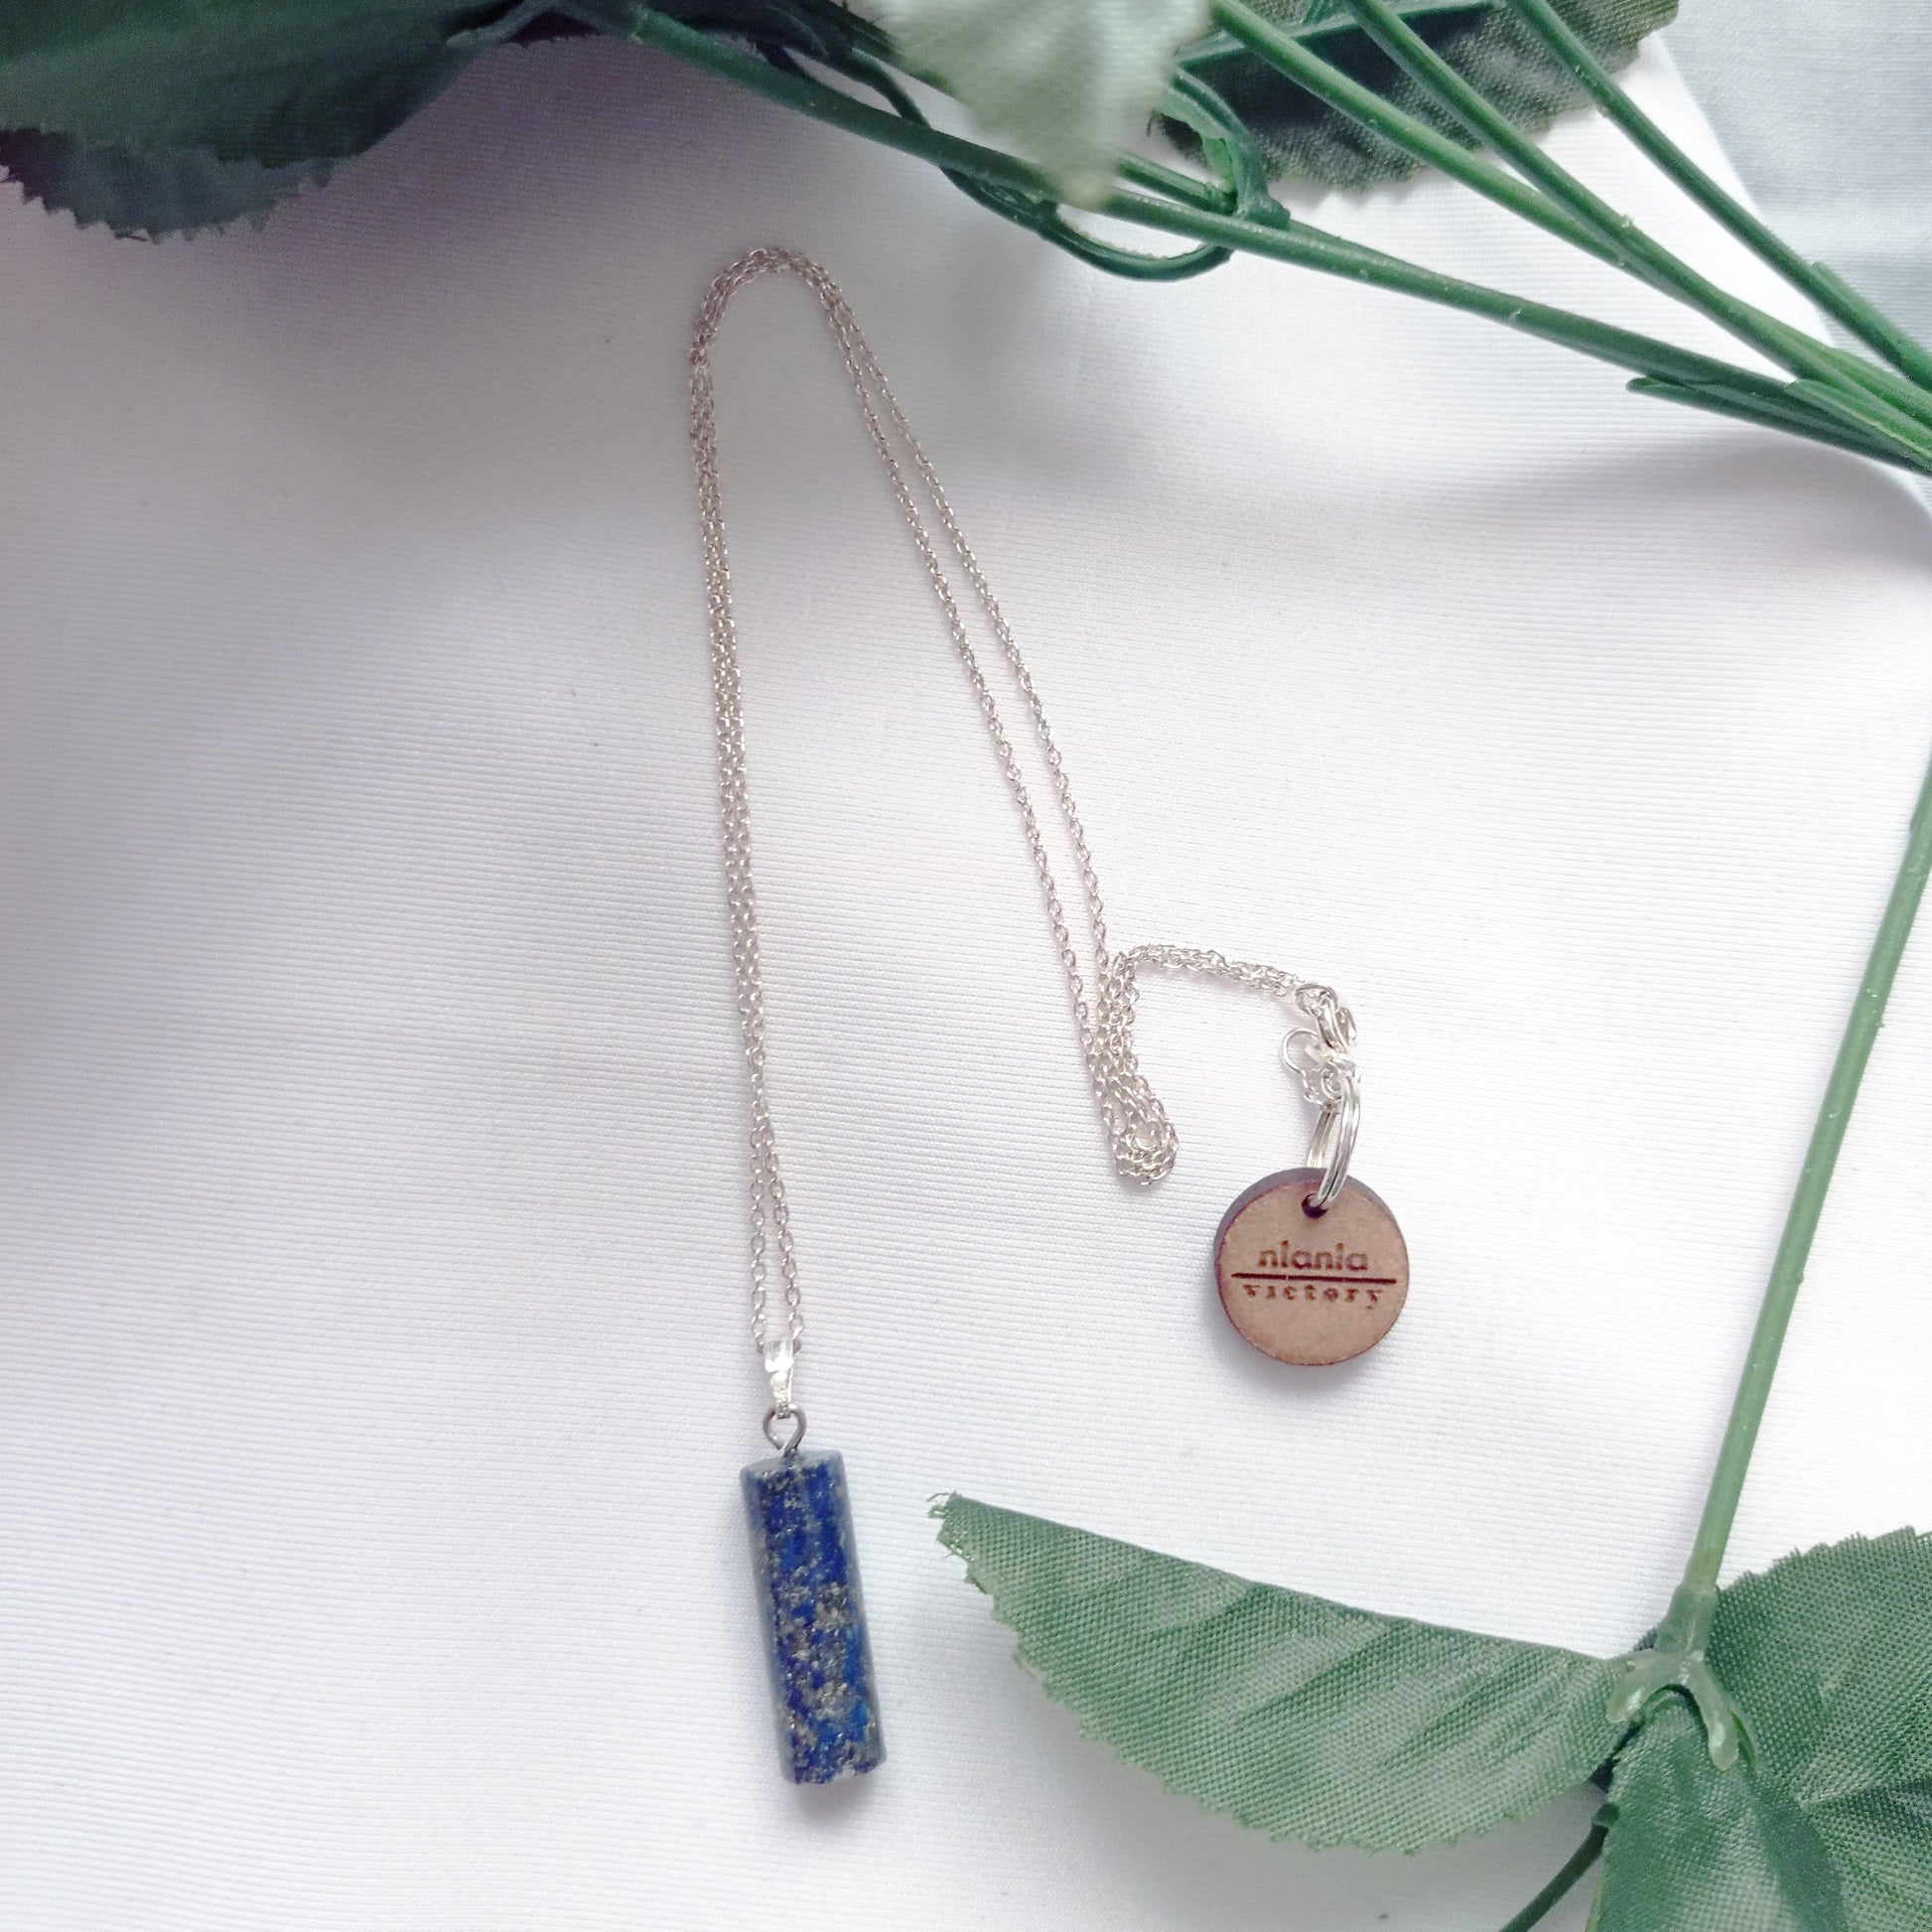 Lapis Lazuli Necklace, Lapis Lazuli Pendant, Sterling Silver Necklace, Gemstone Pendant Necklace | by nlanlaVictory-1